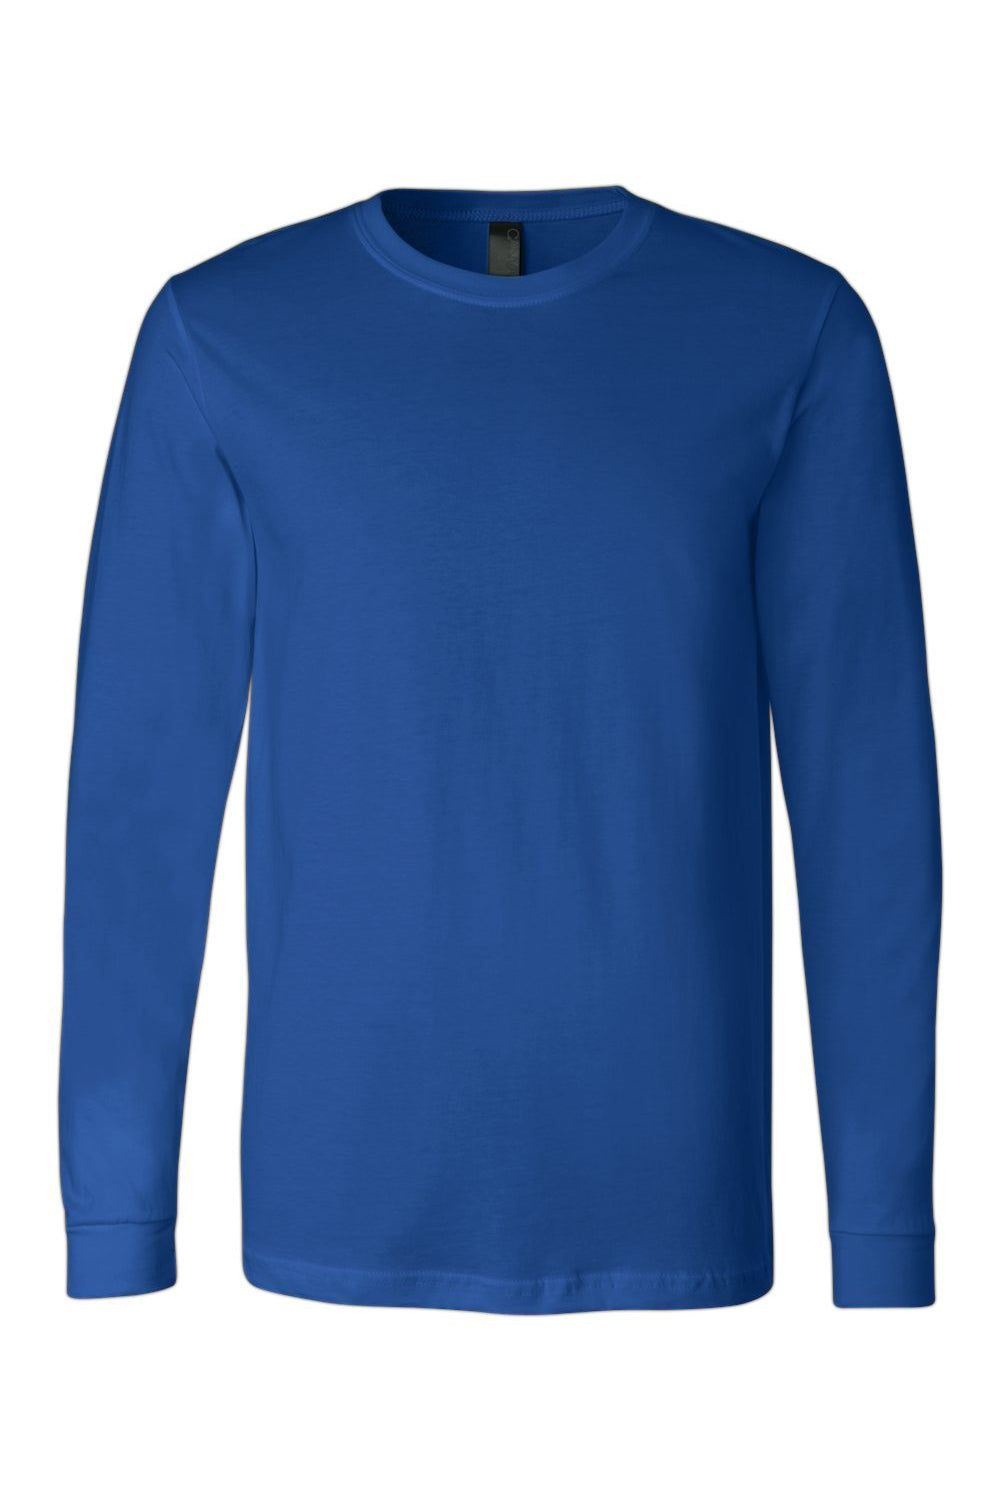 Bella + Canvas BC3501/3501 Mens Jersey Long Sleeve Crewneck T-Shirt True Royal Blue Flat Front